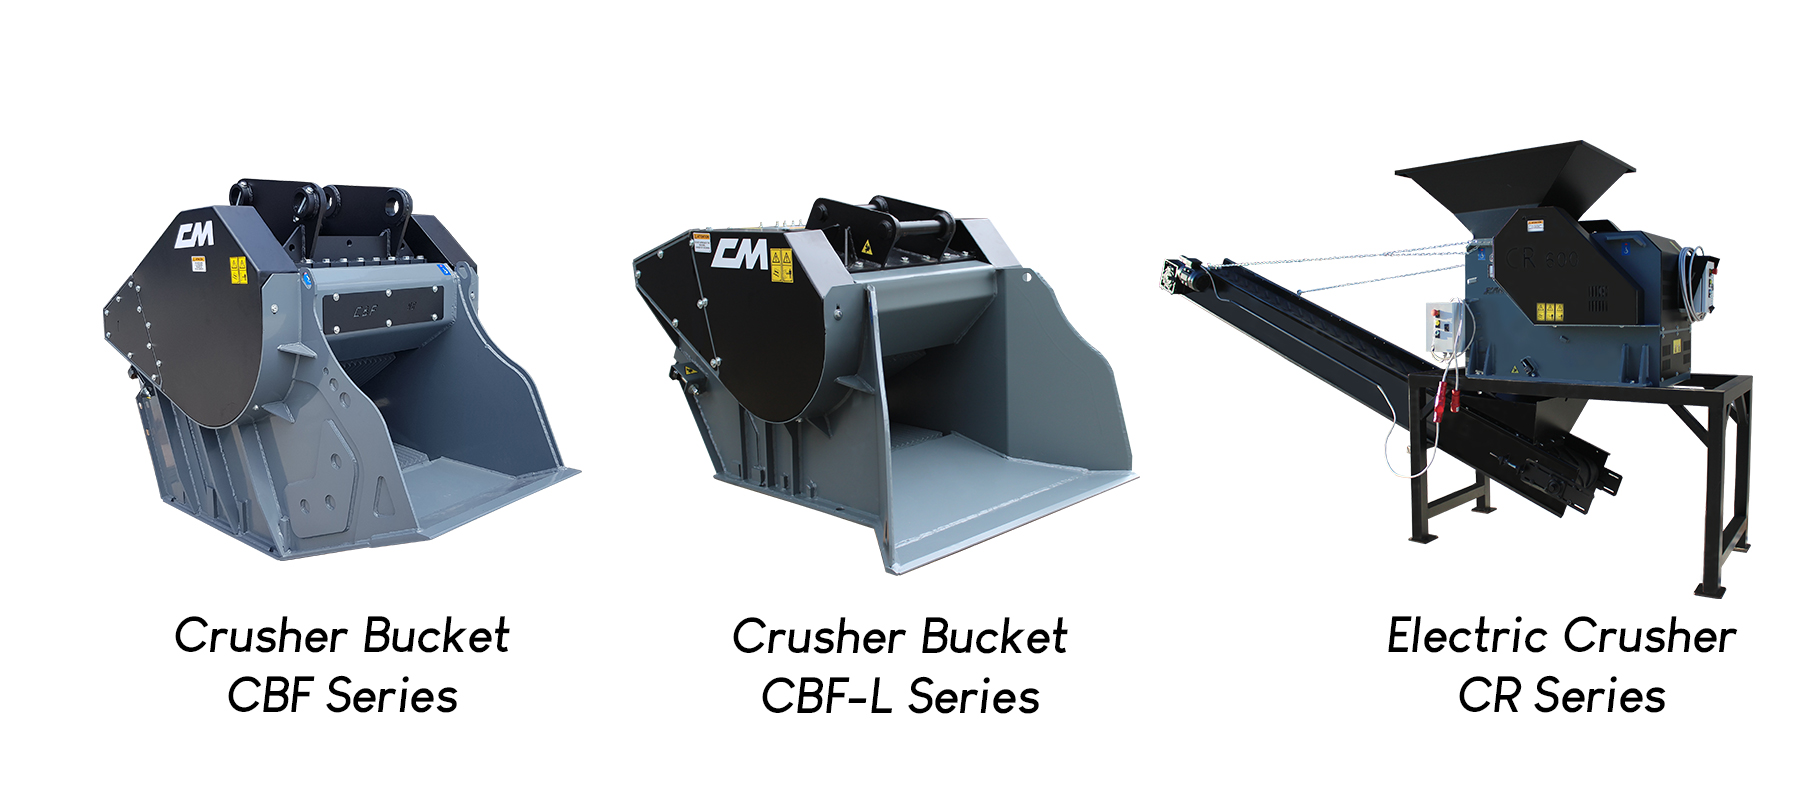 crusher-bucket-and-electric-crusher